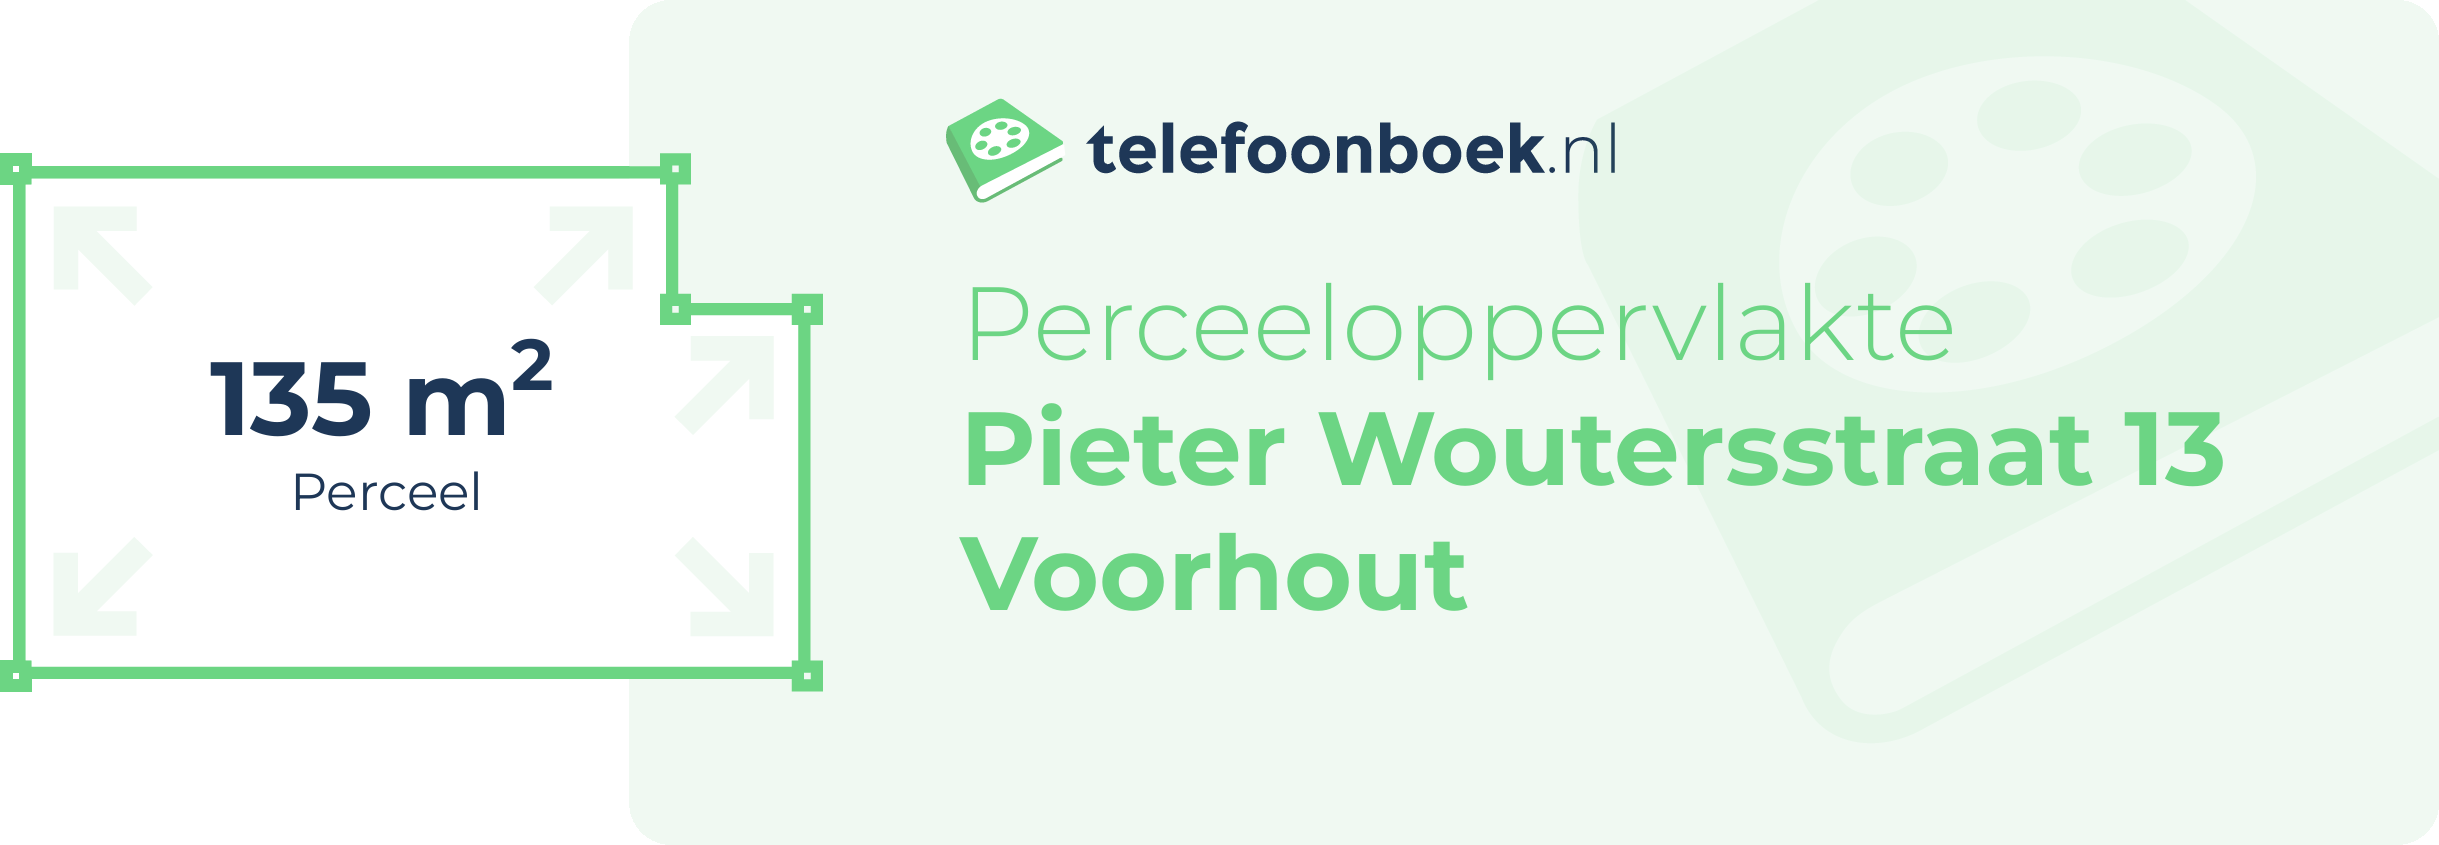 Perceeloppervlakte Pieter Woutersstraat 13 Voorhout